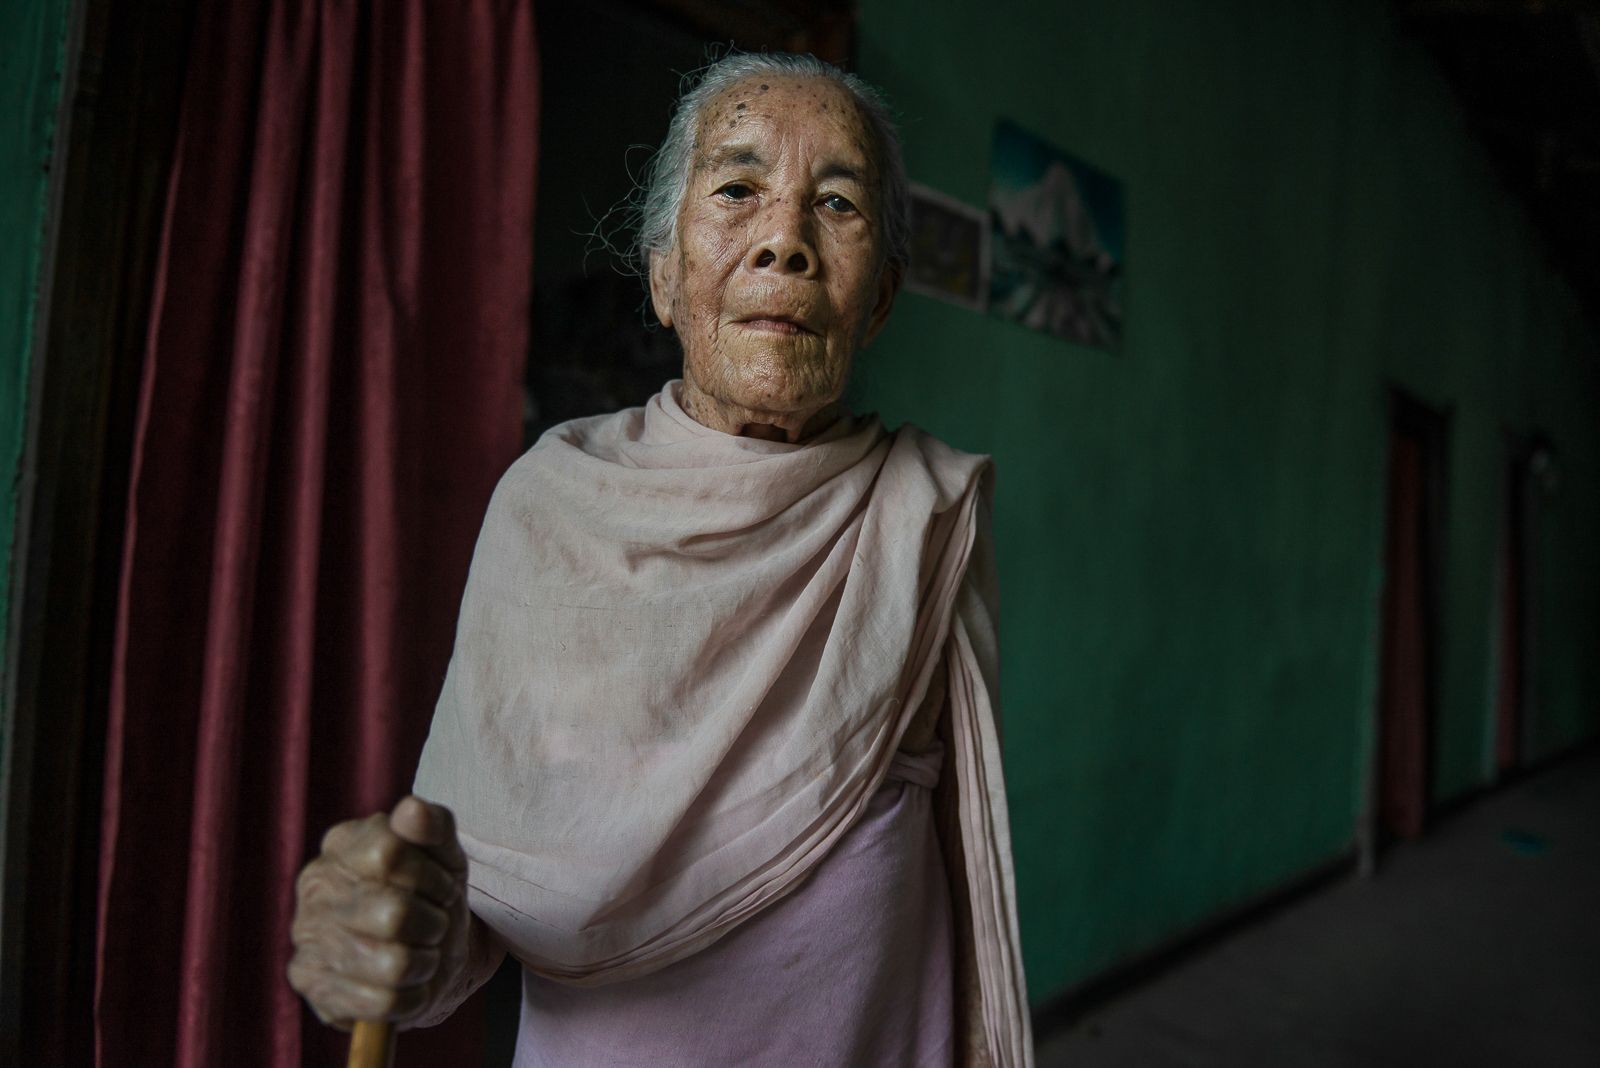 Sana Hanbi, a 92-year old resident of the village of Thanga Tongbram, poses for a portrait. Image by Neeta Satam. India, 2017.
